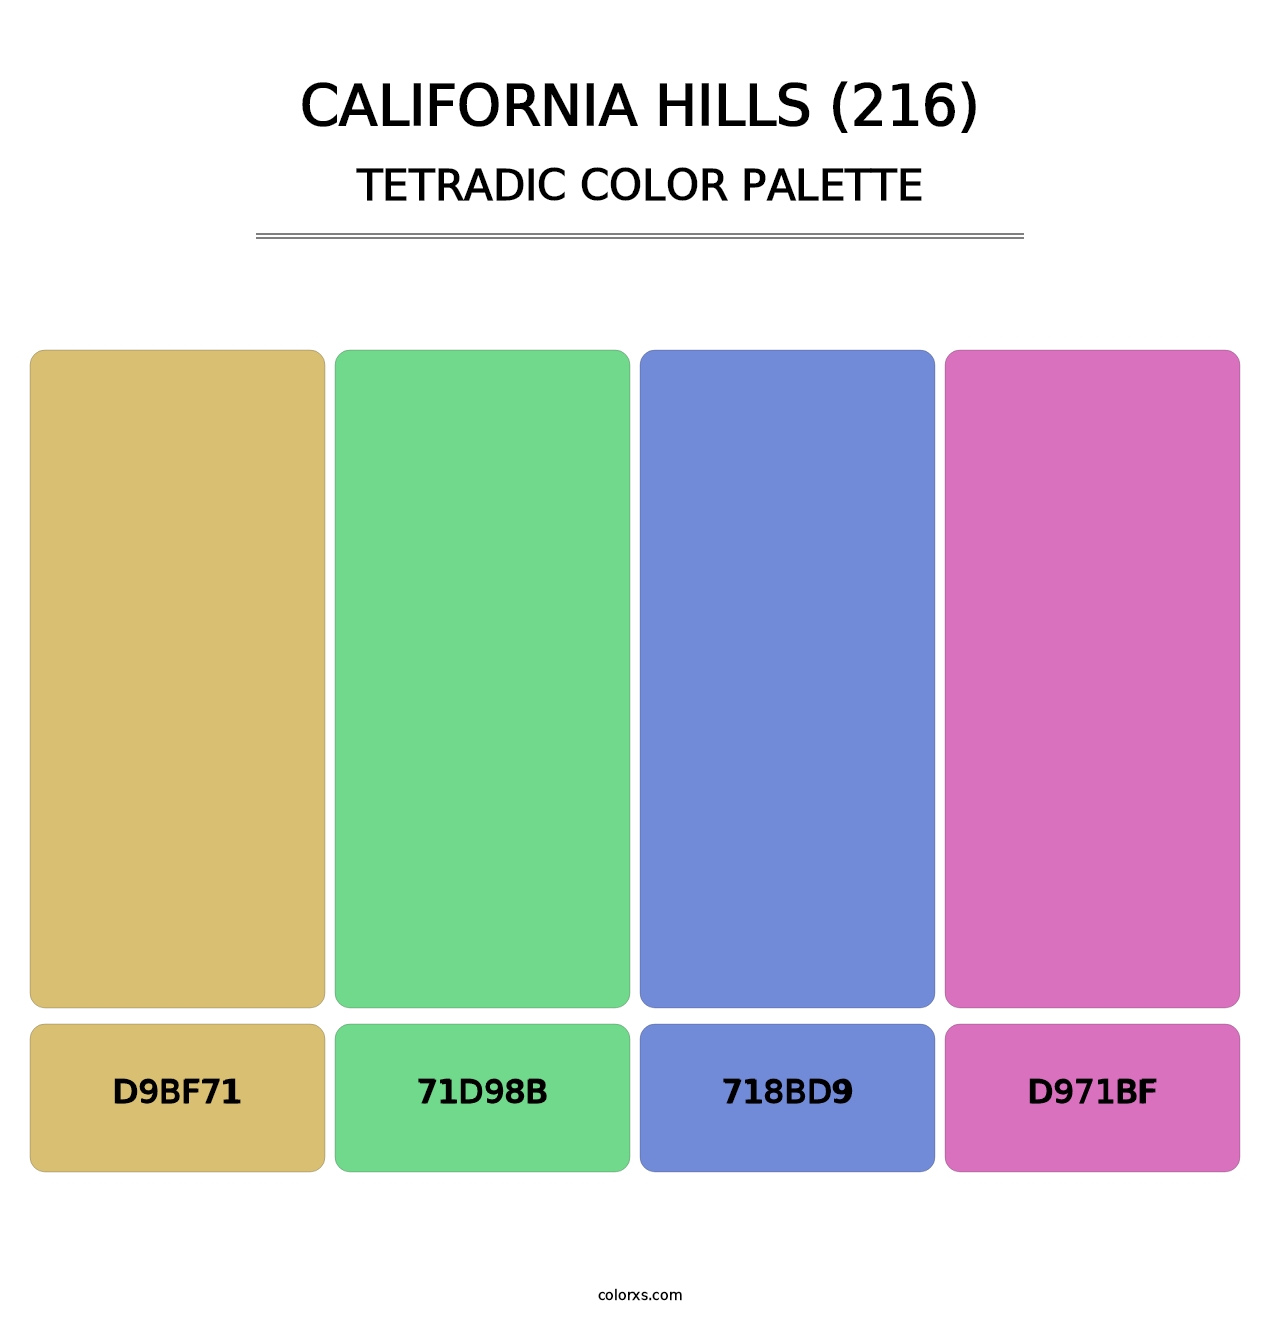 California Hills (216) - Tetradic Color Palette